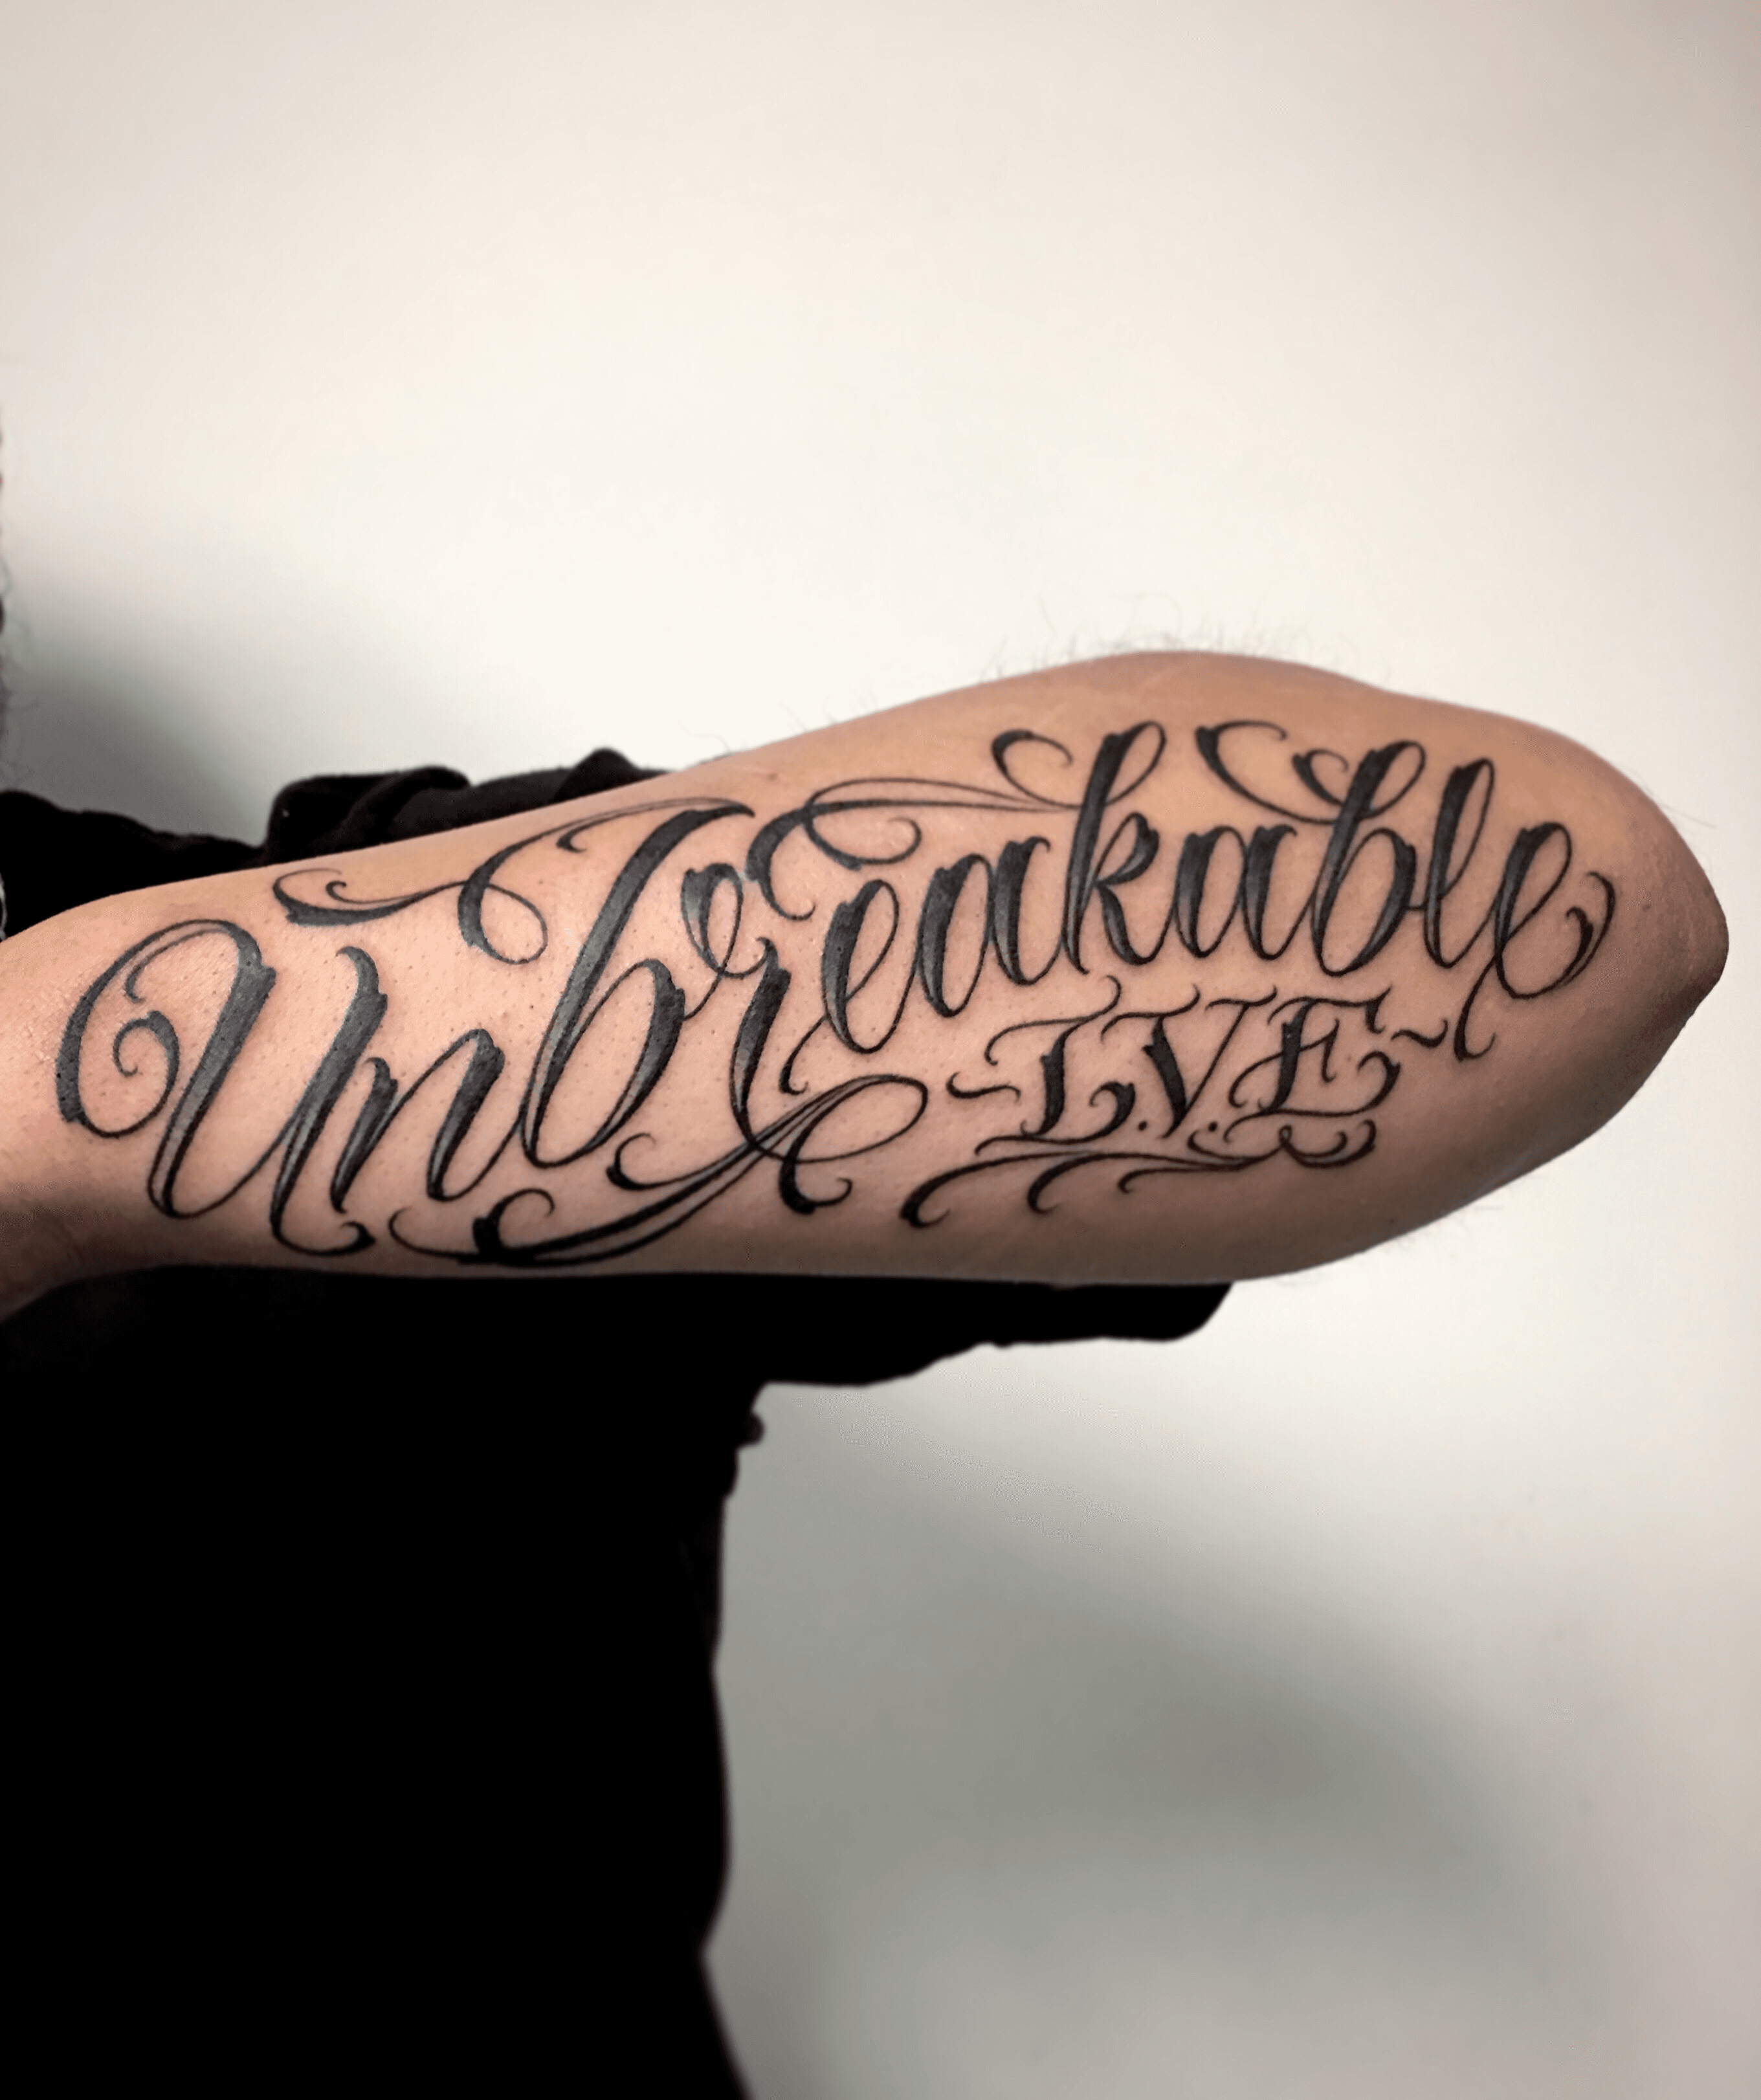 Tattoos  Piercings  Unbreakable Bond  Mobile Tattoo Script  Blackink Newink Tatted Quarantine Work Time Gta Canada  Facebook